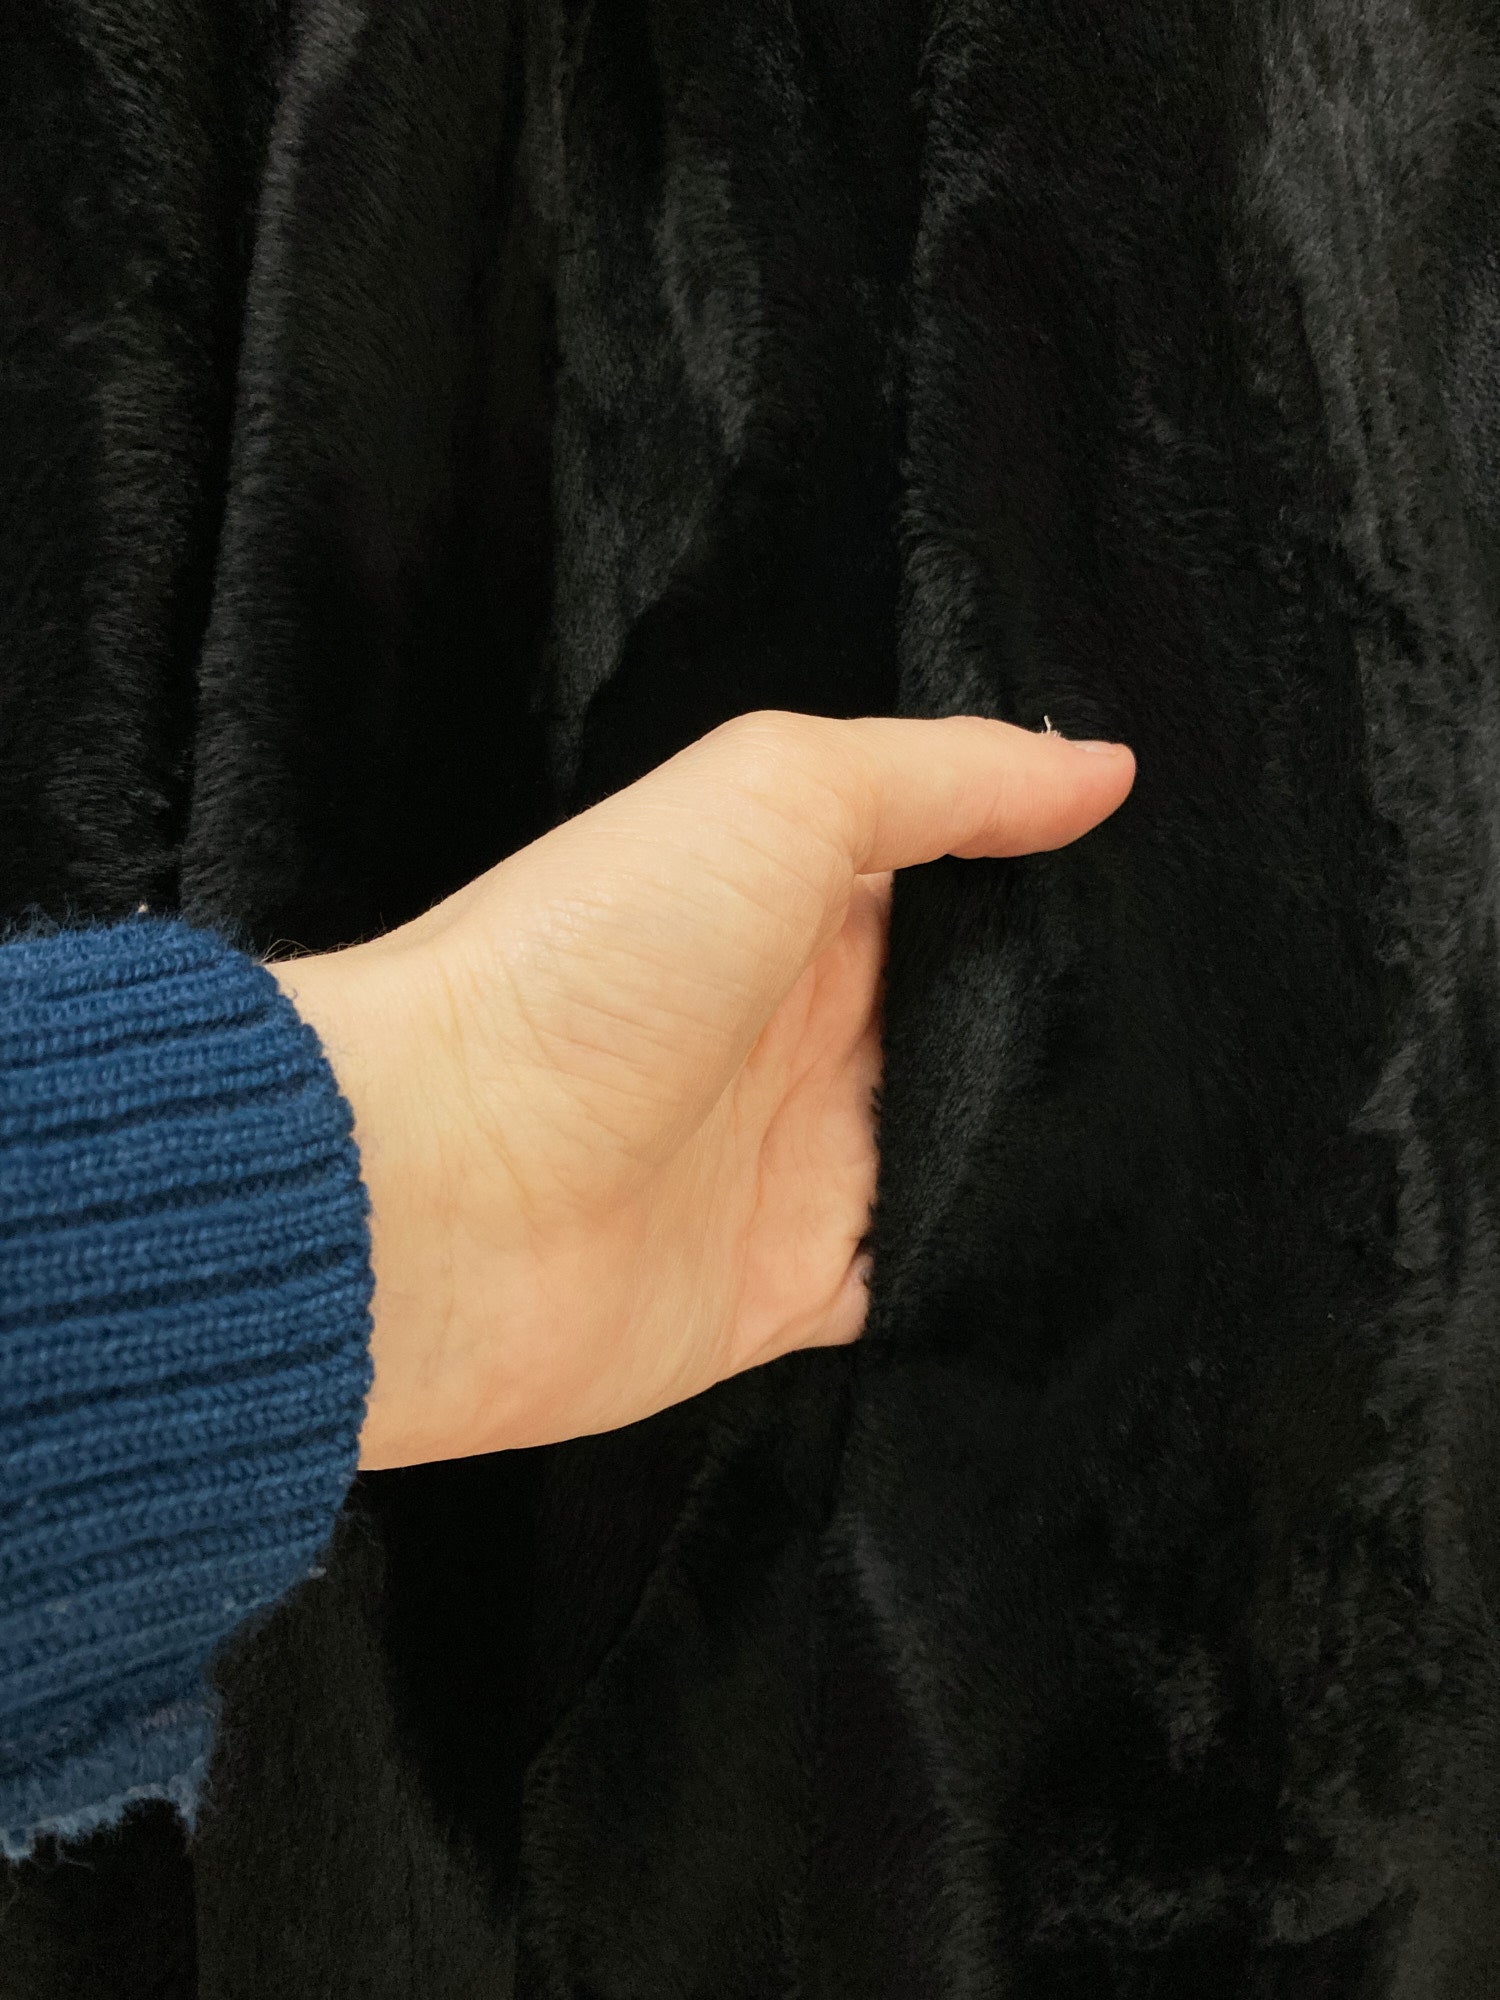 Martine Sitbon 1990s black faux fur high neck stand collar coat - womens 38